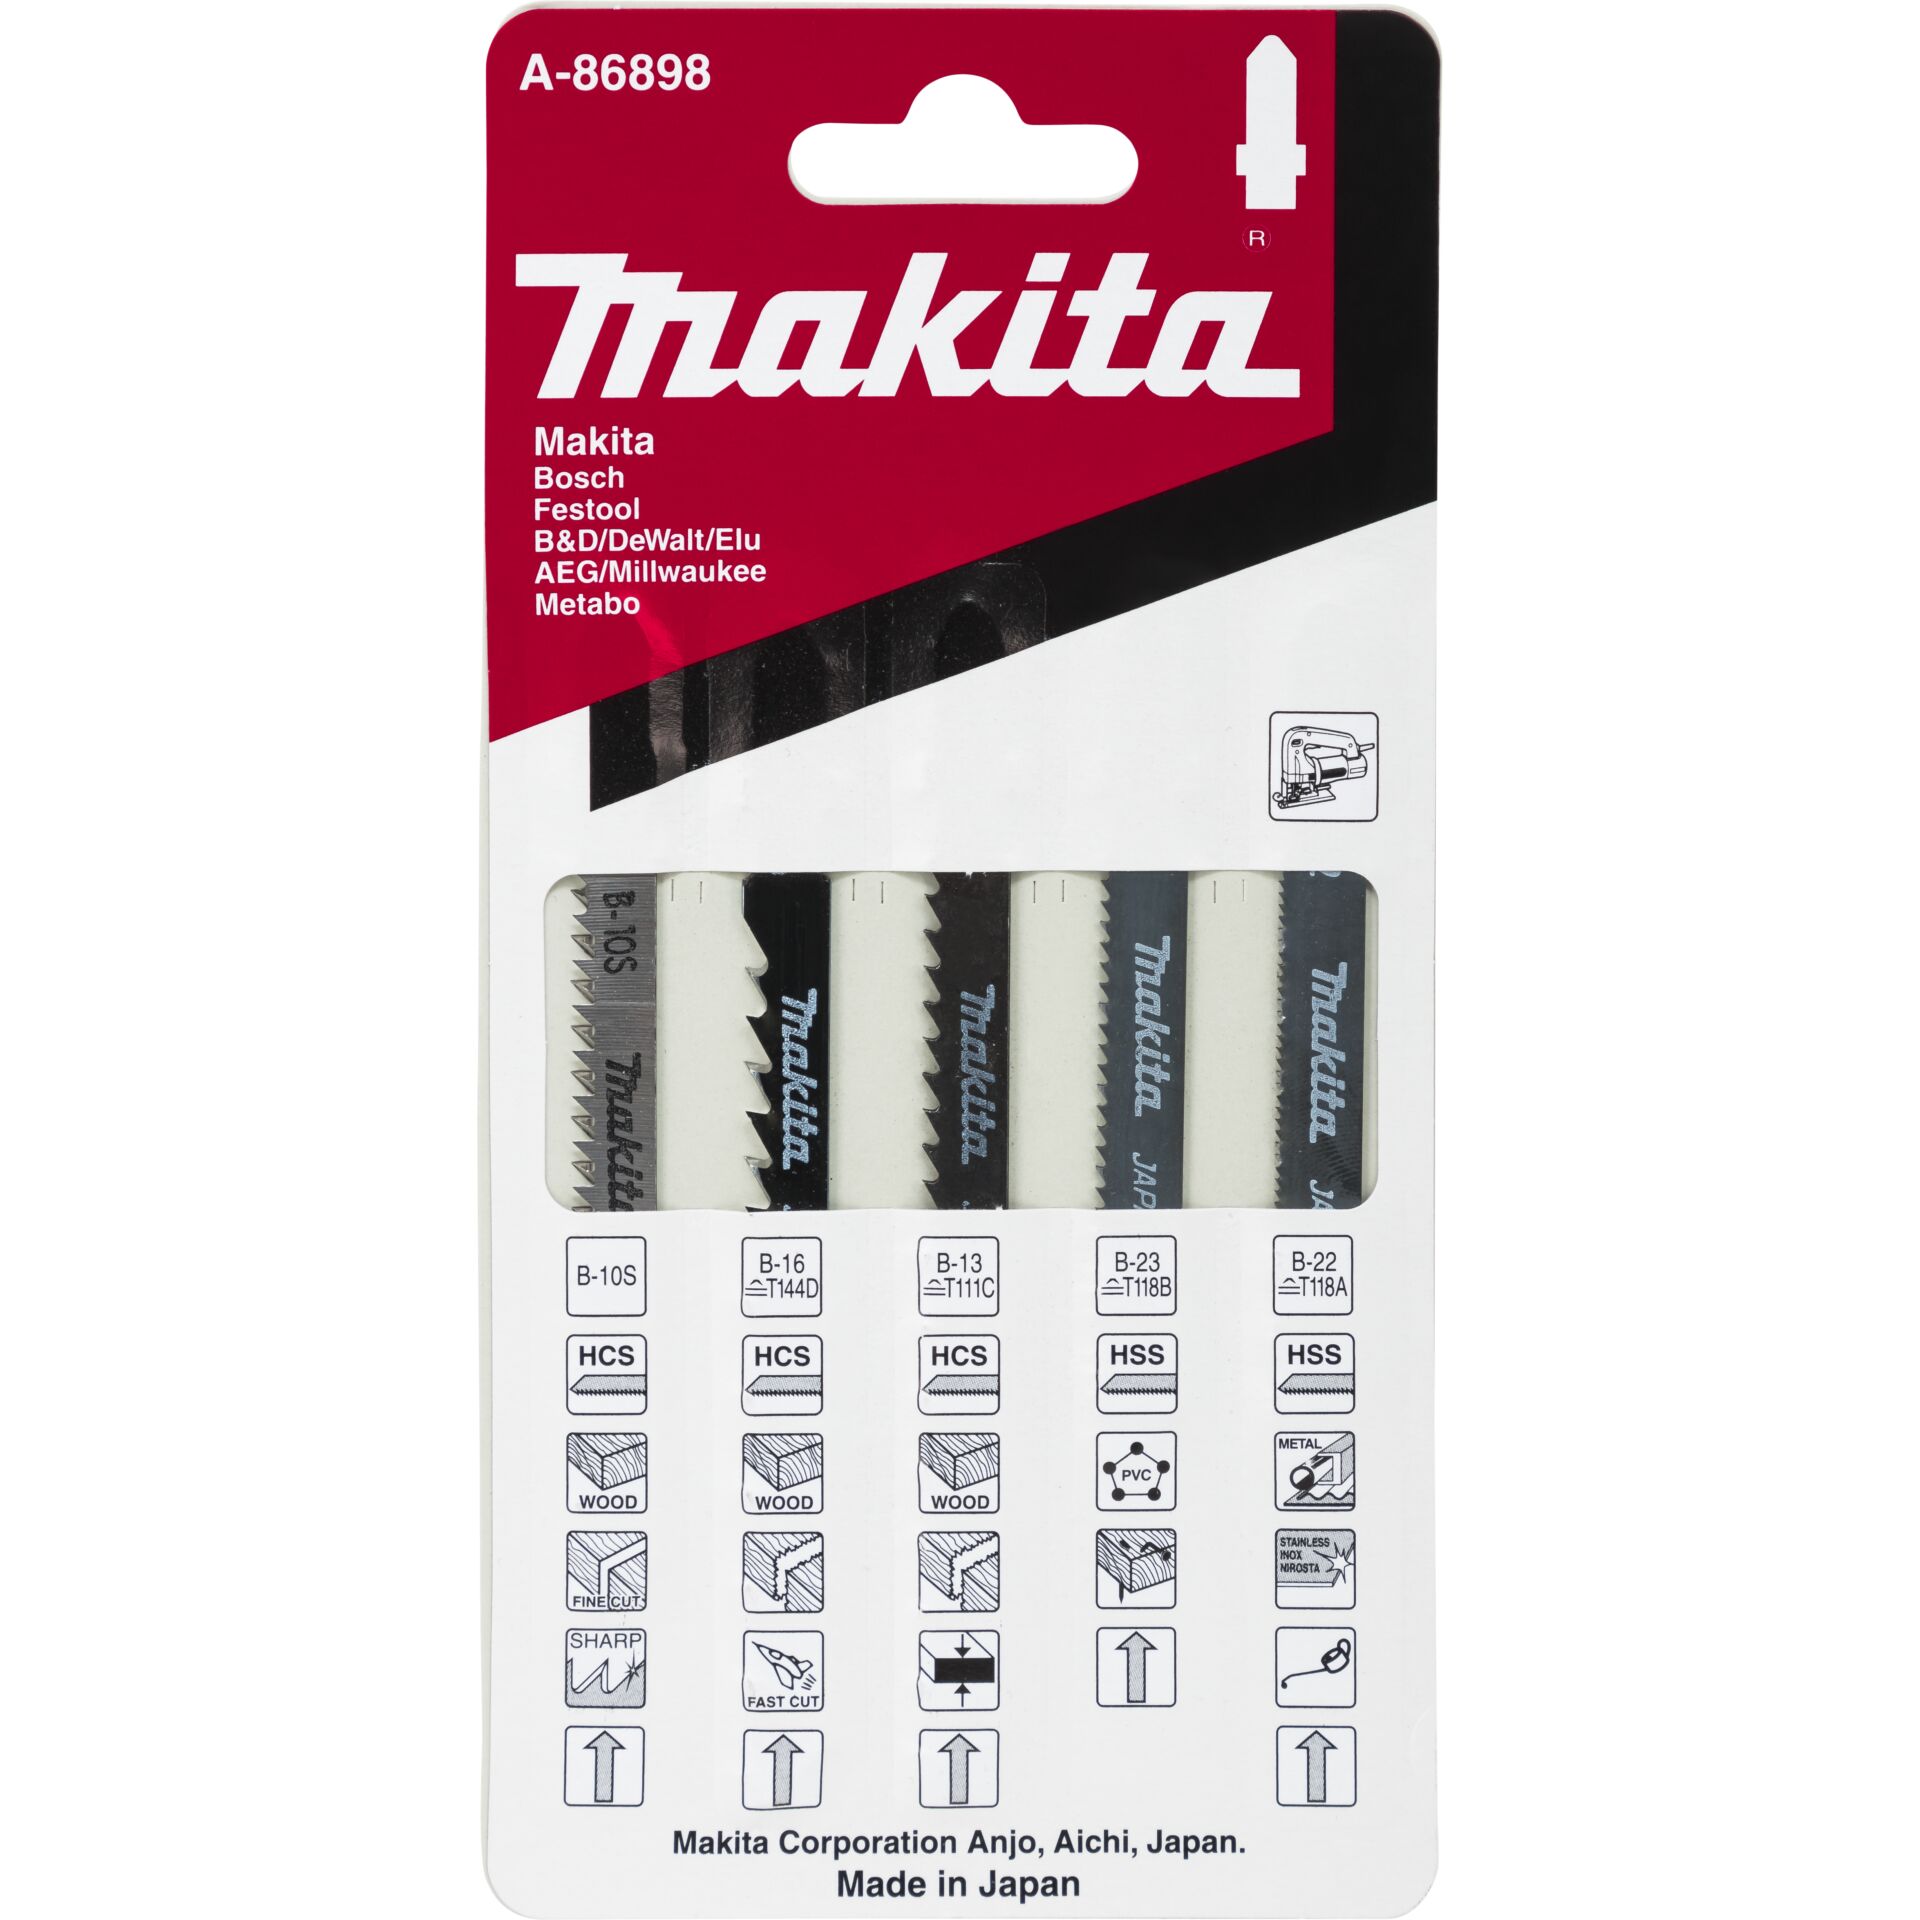 Makita A-86898 Sägeblatt für Stichsägen, Laubsägen & elektrische Sägen 5 Stück(e)